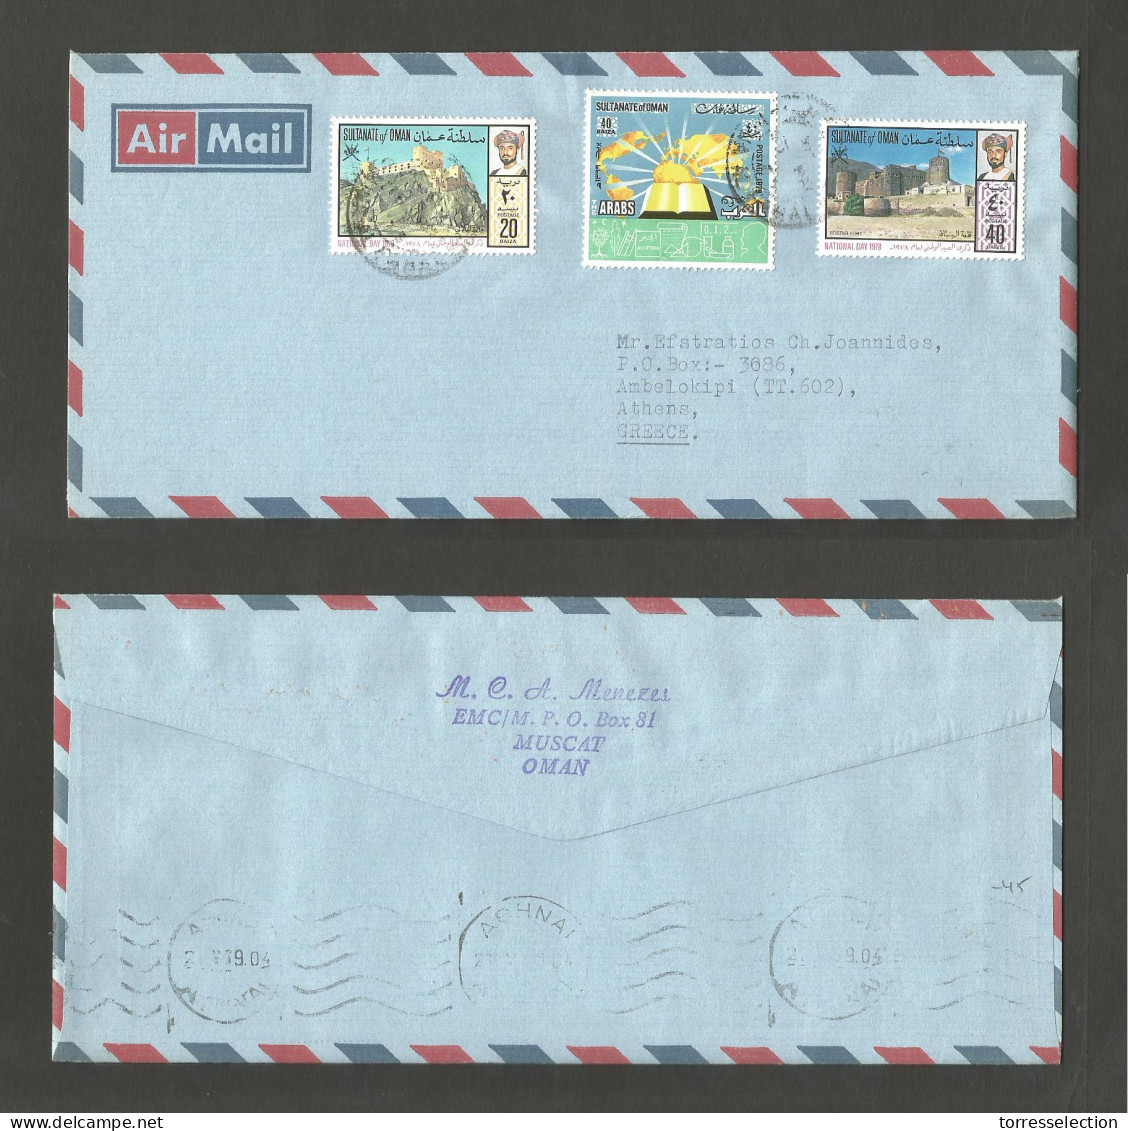 OMAN. 1979. Muscat - Greece, Athens (22 May 79) Air Multifkd Sultanate Period Envelope. Proper Circulated Usage. VF. - Oman